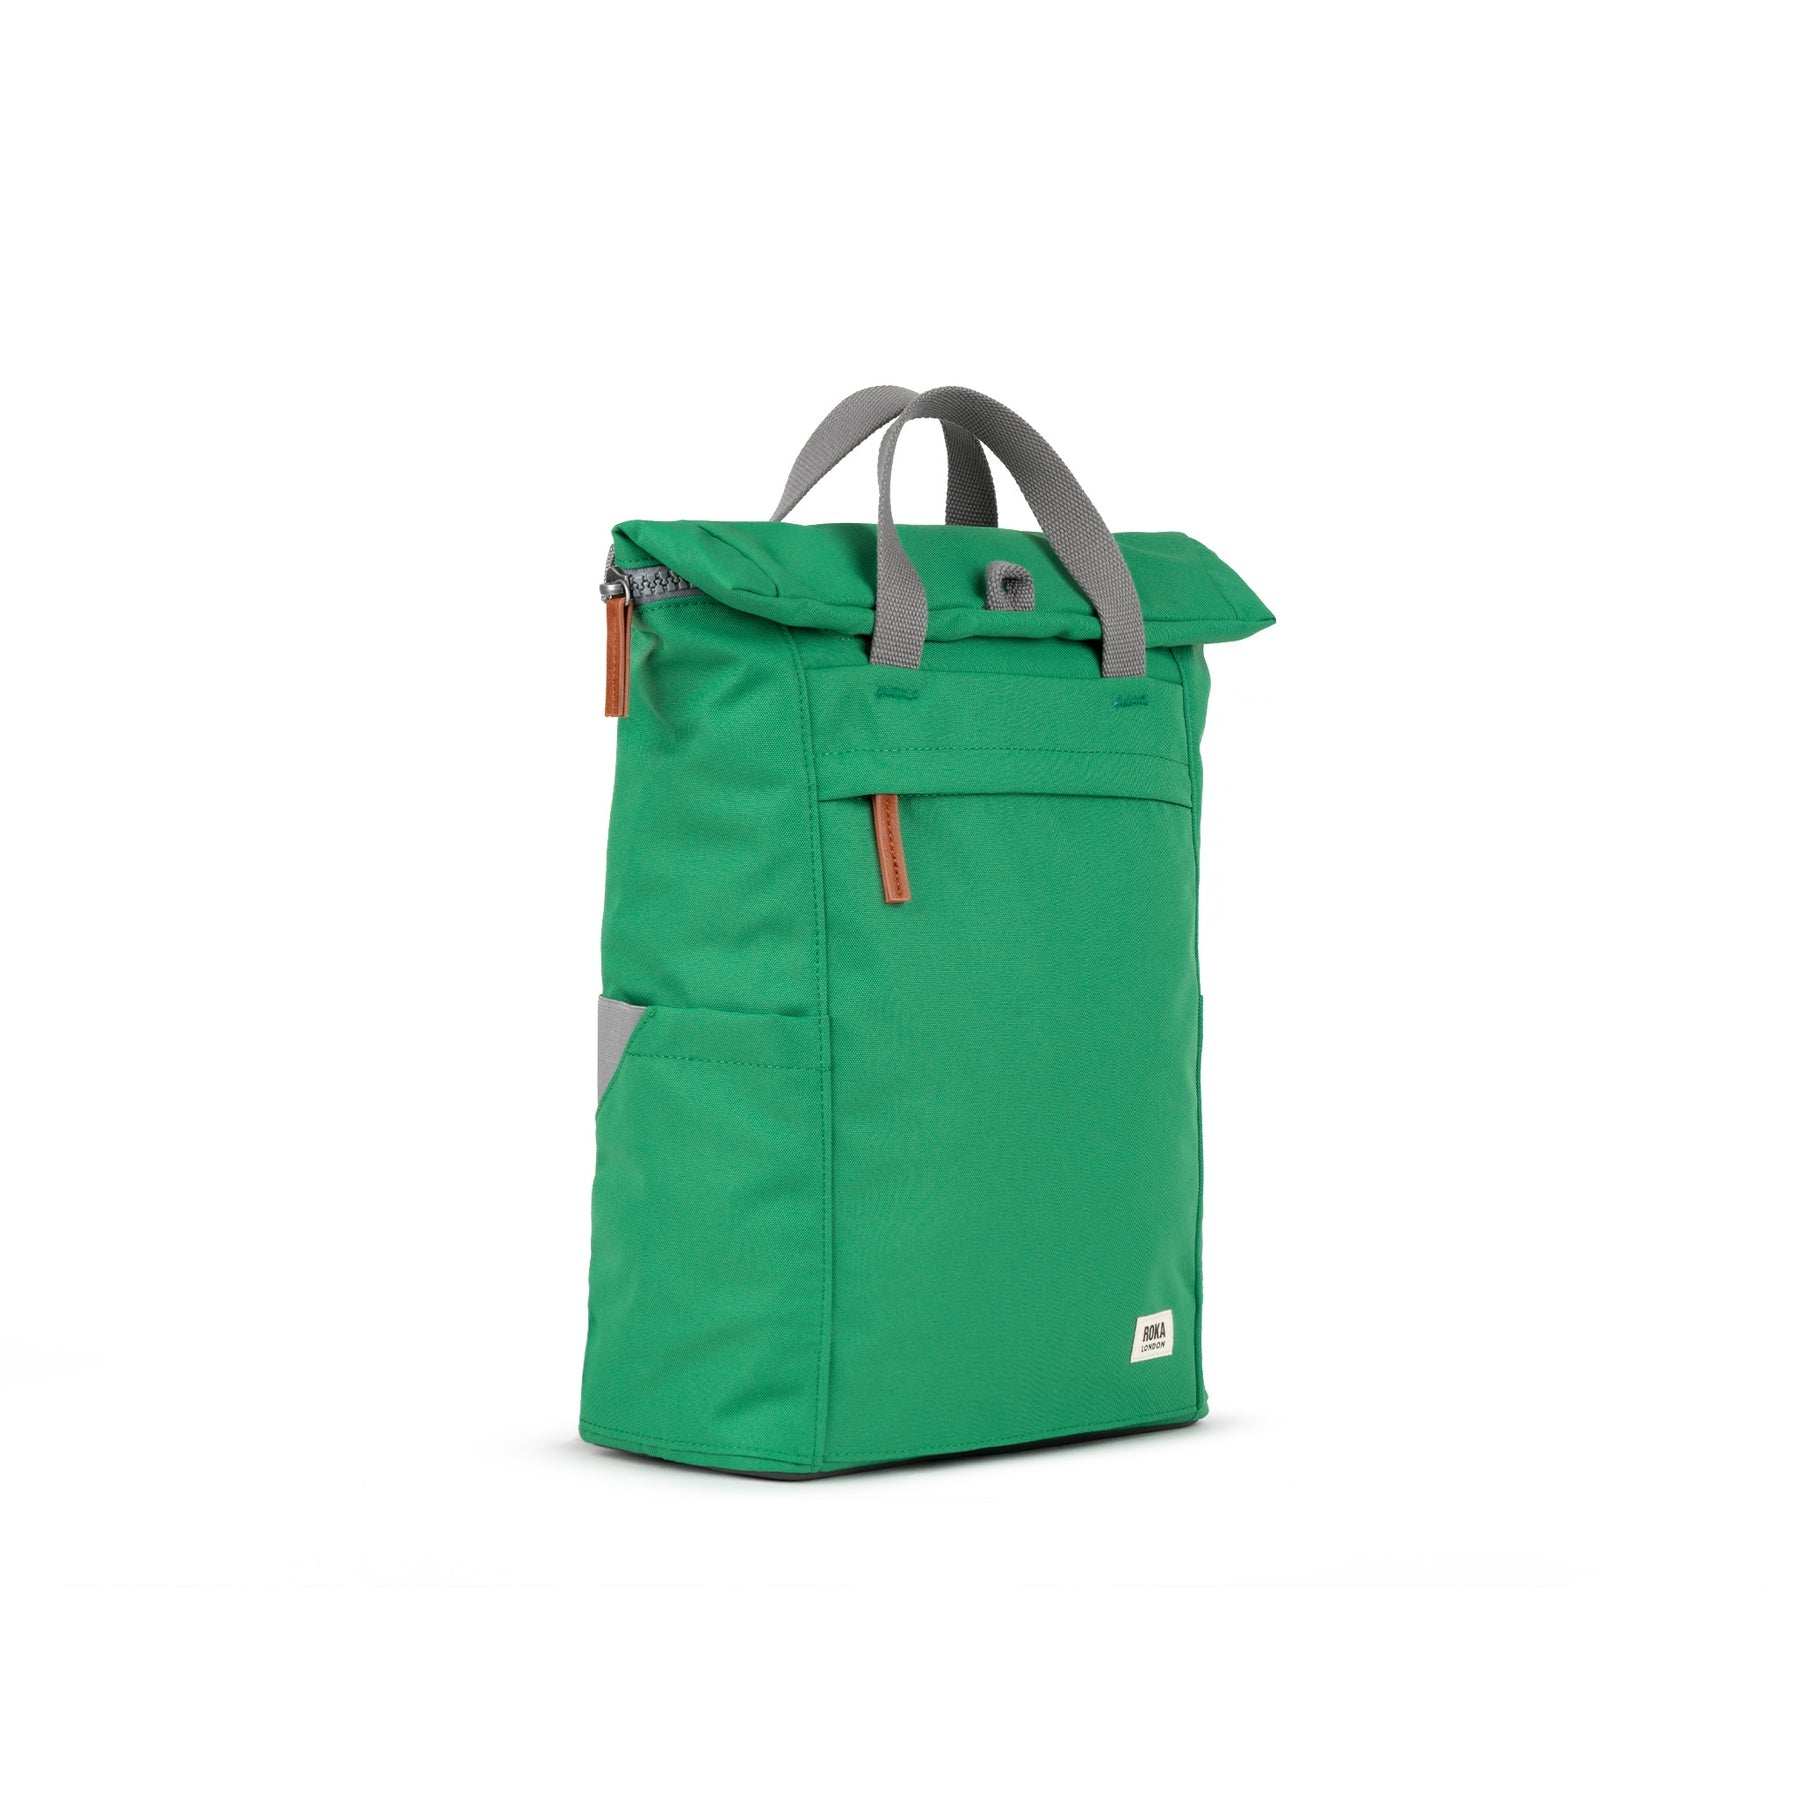 ROKA Finchley A Mountain Green Medium Recycled Canvas Bag